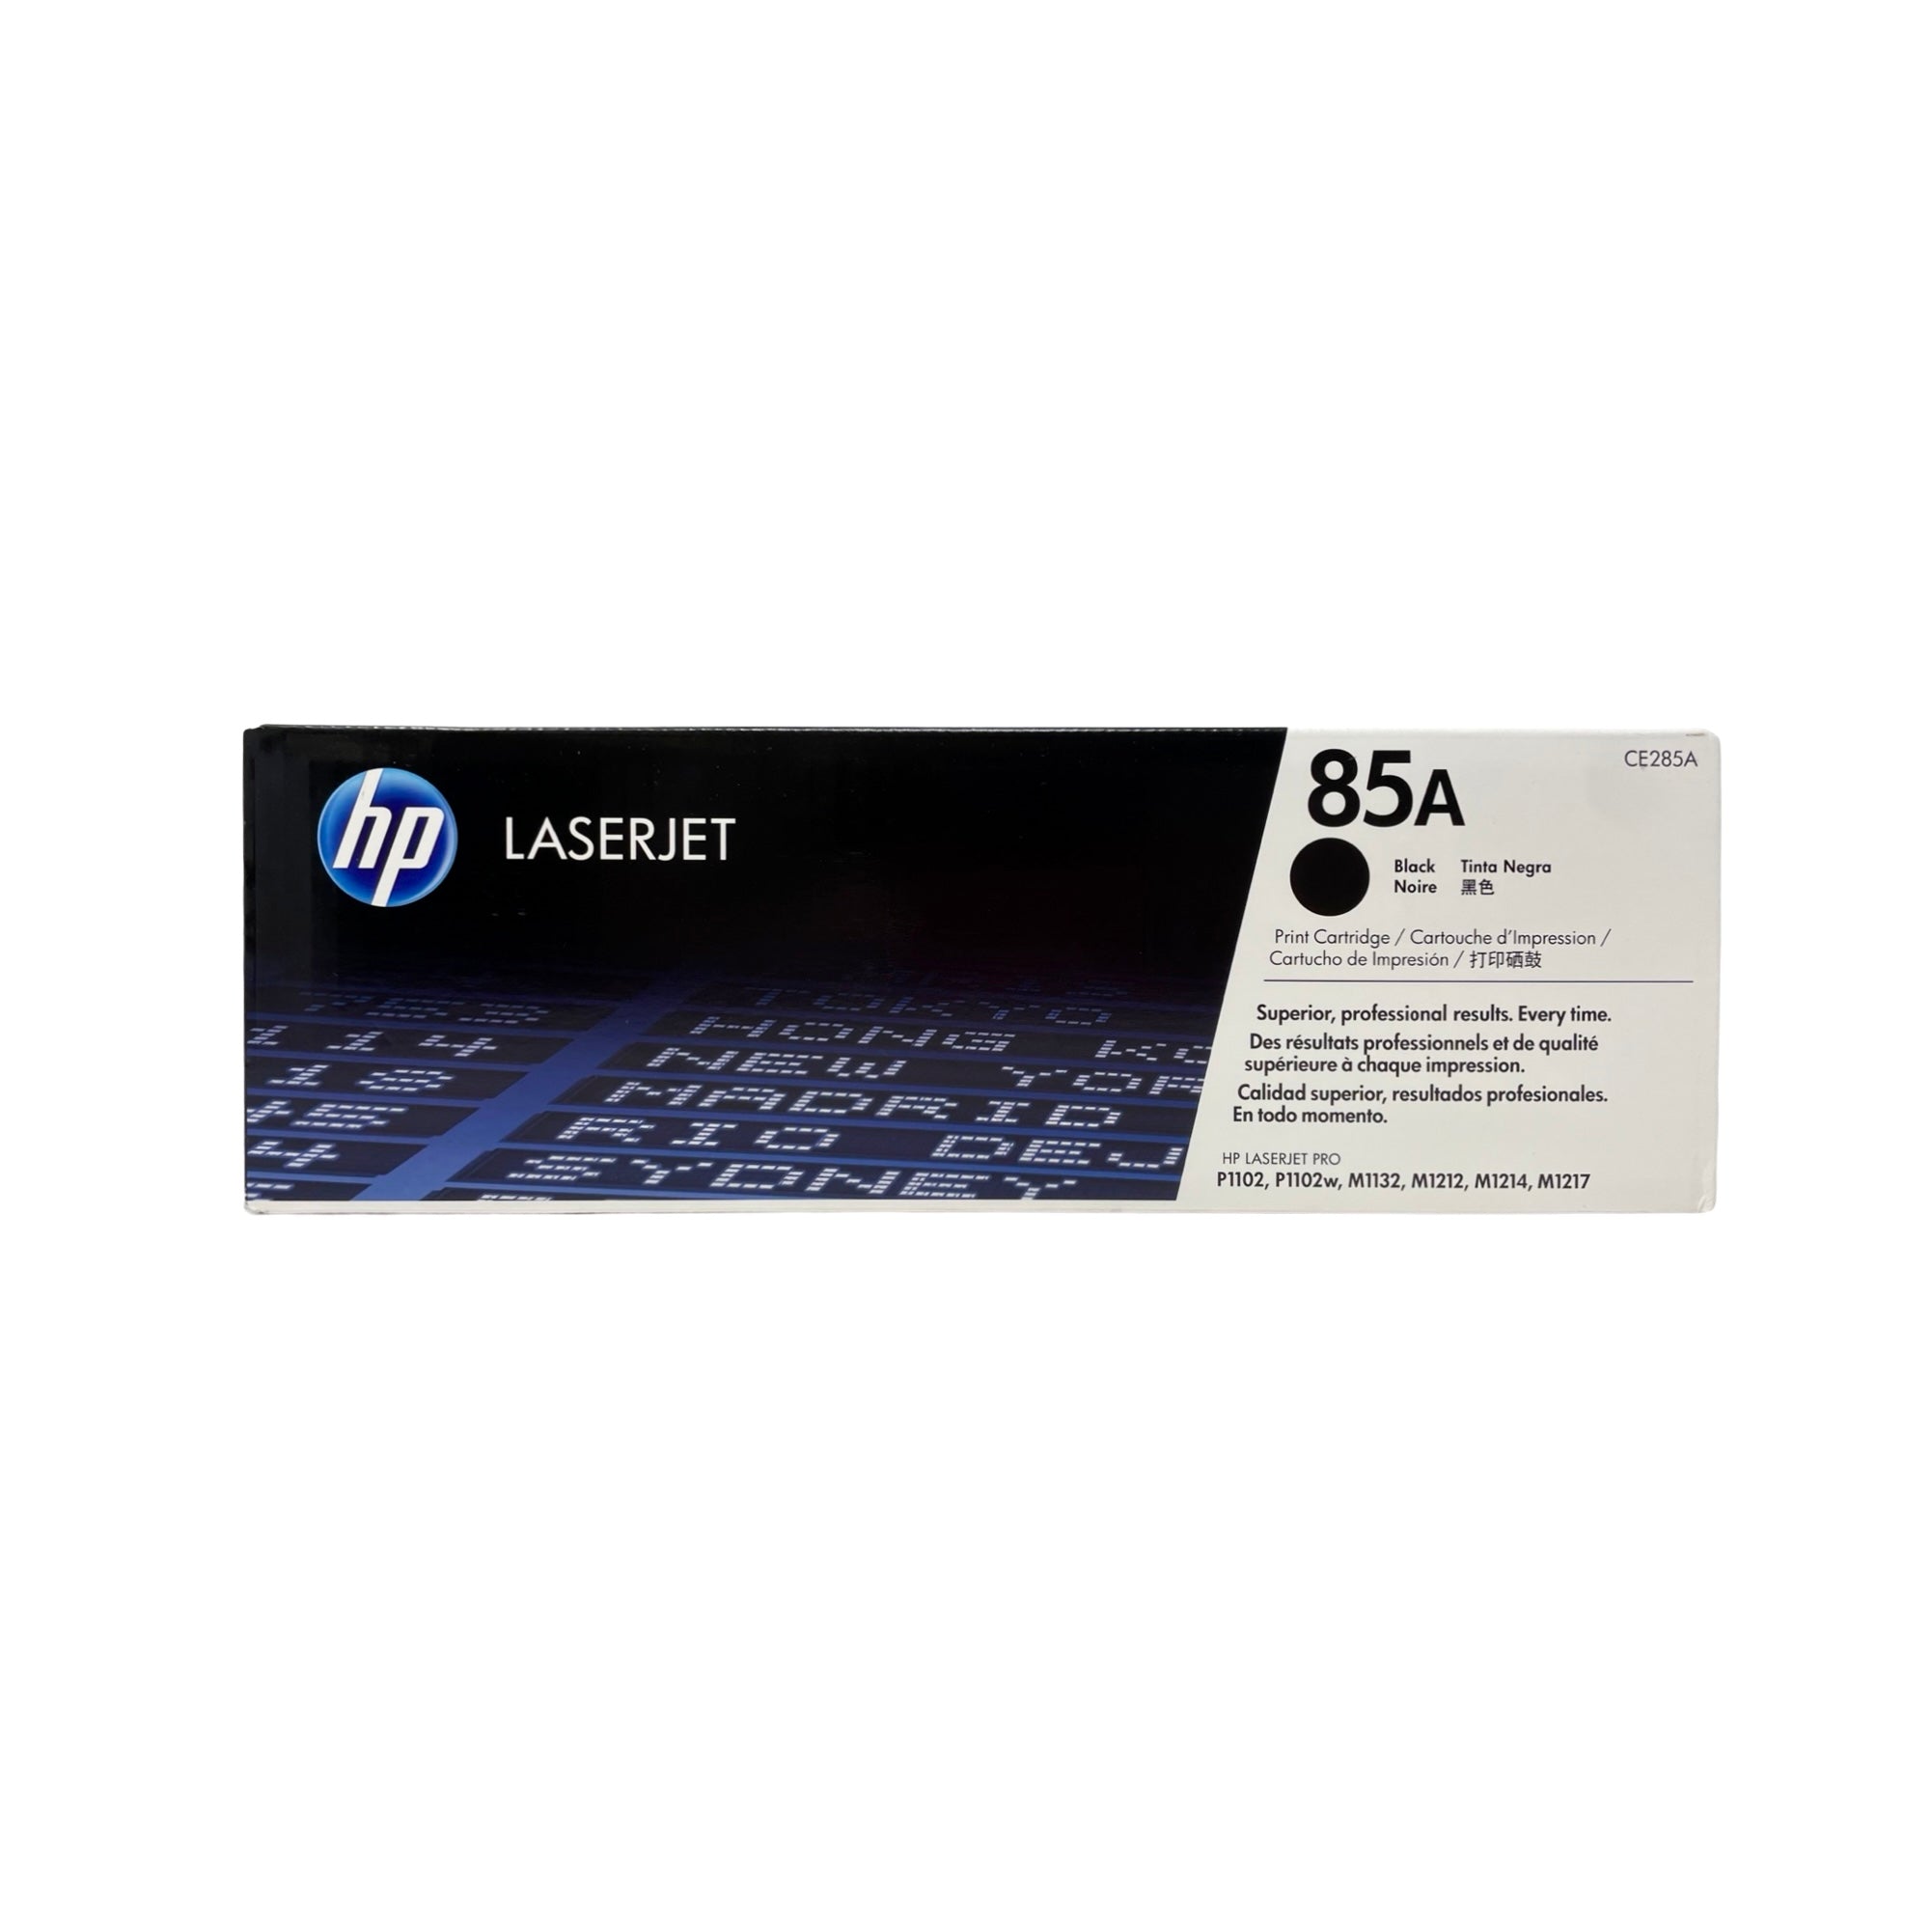 Genuine HP 85A CE285A LaserJet Black Toner Cartridge